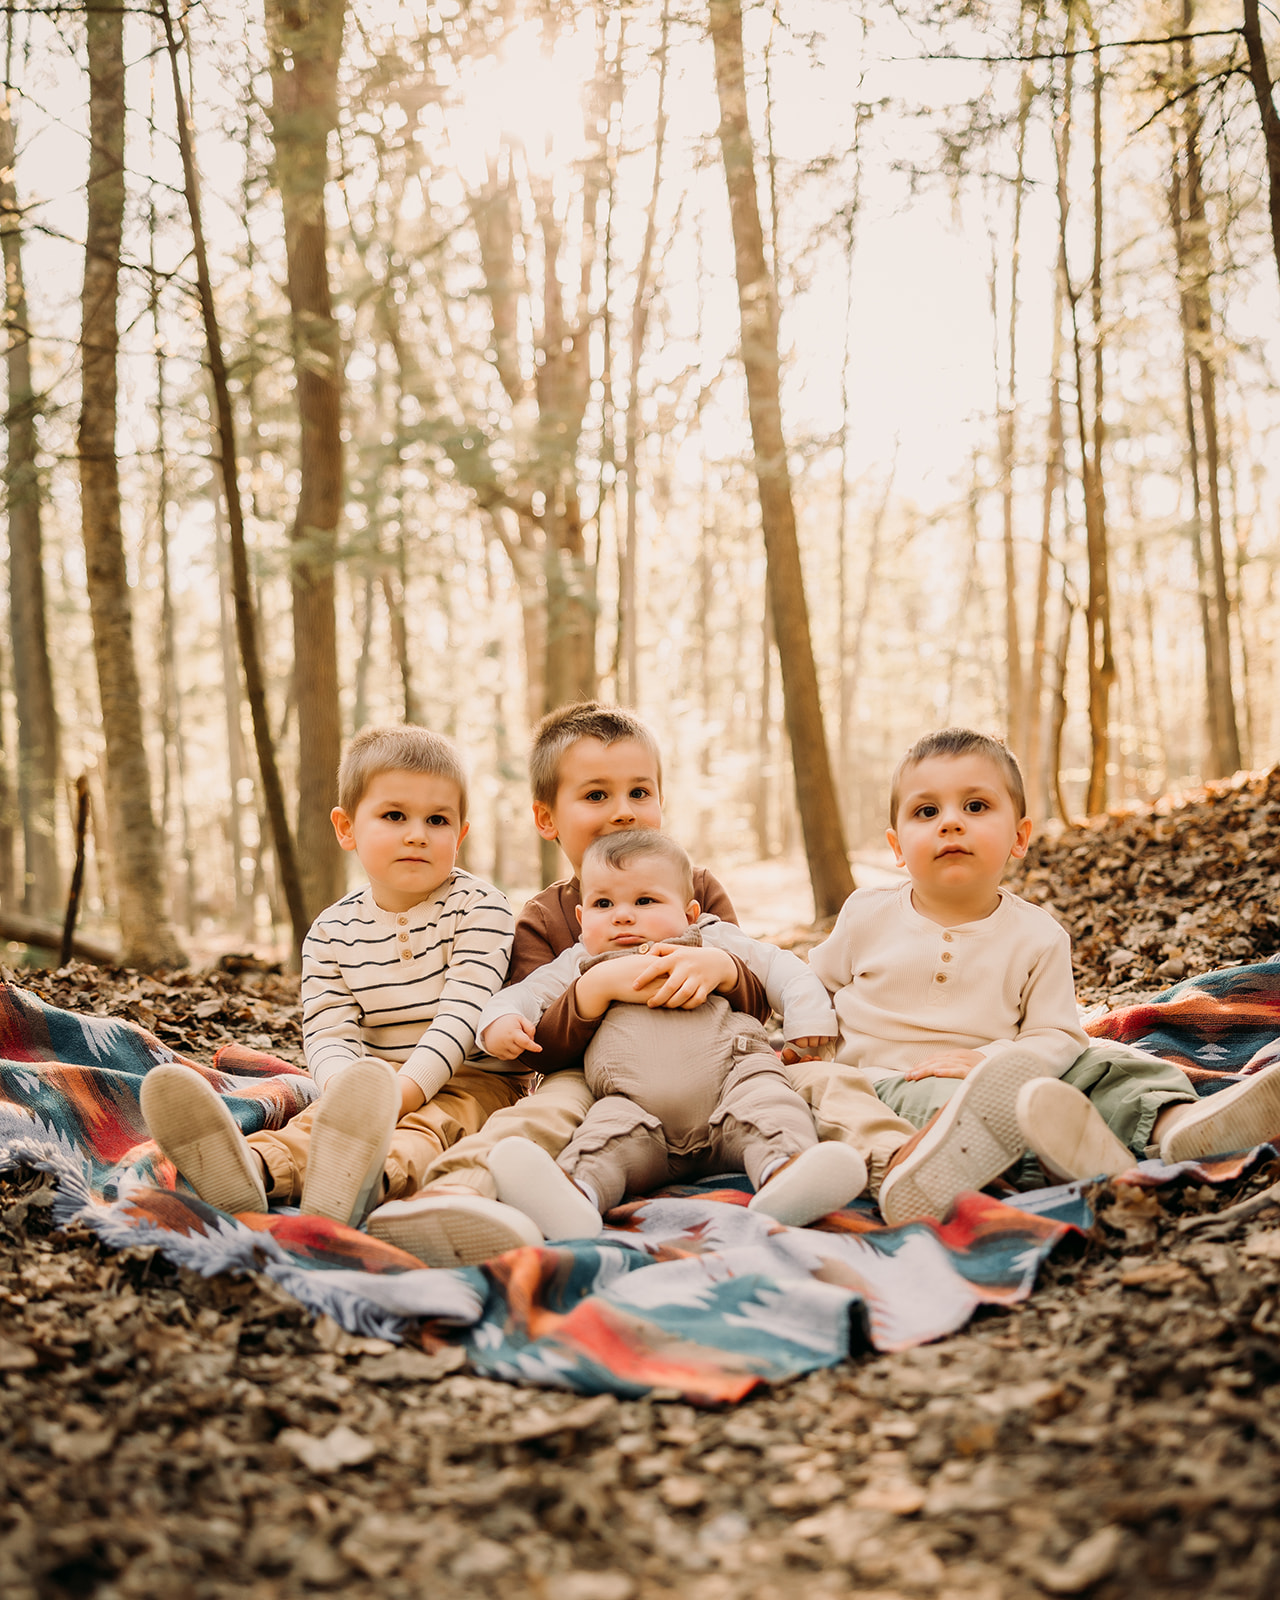 Happy kids capturing joyful moments in an outdoor photoshoot